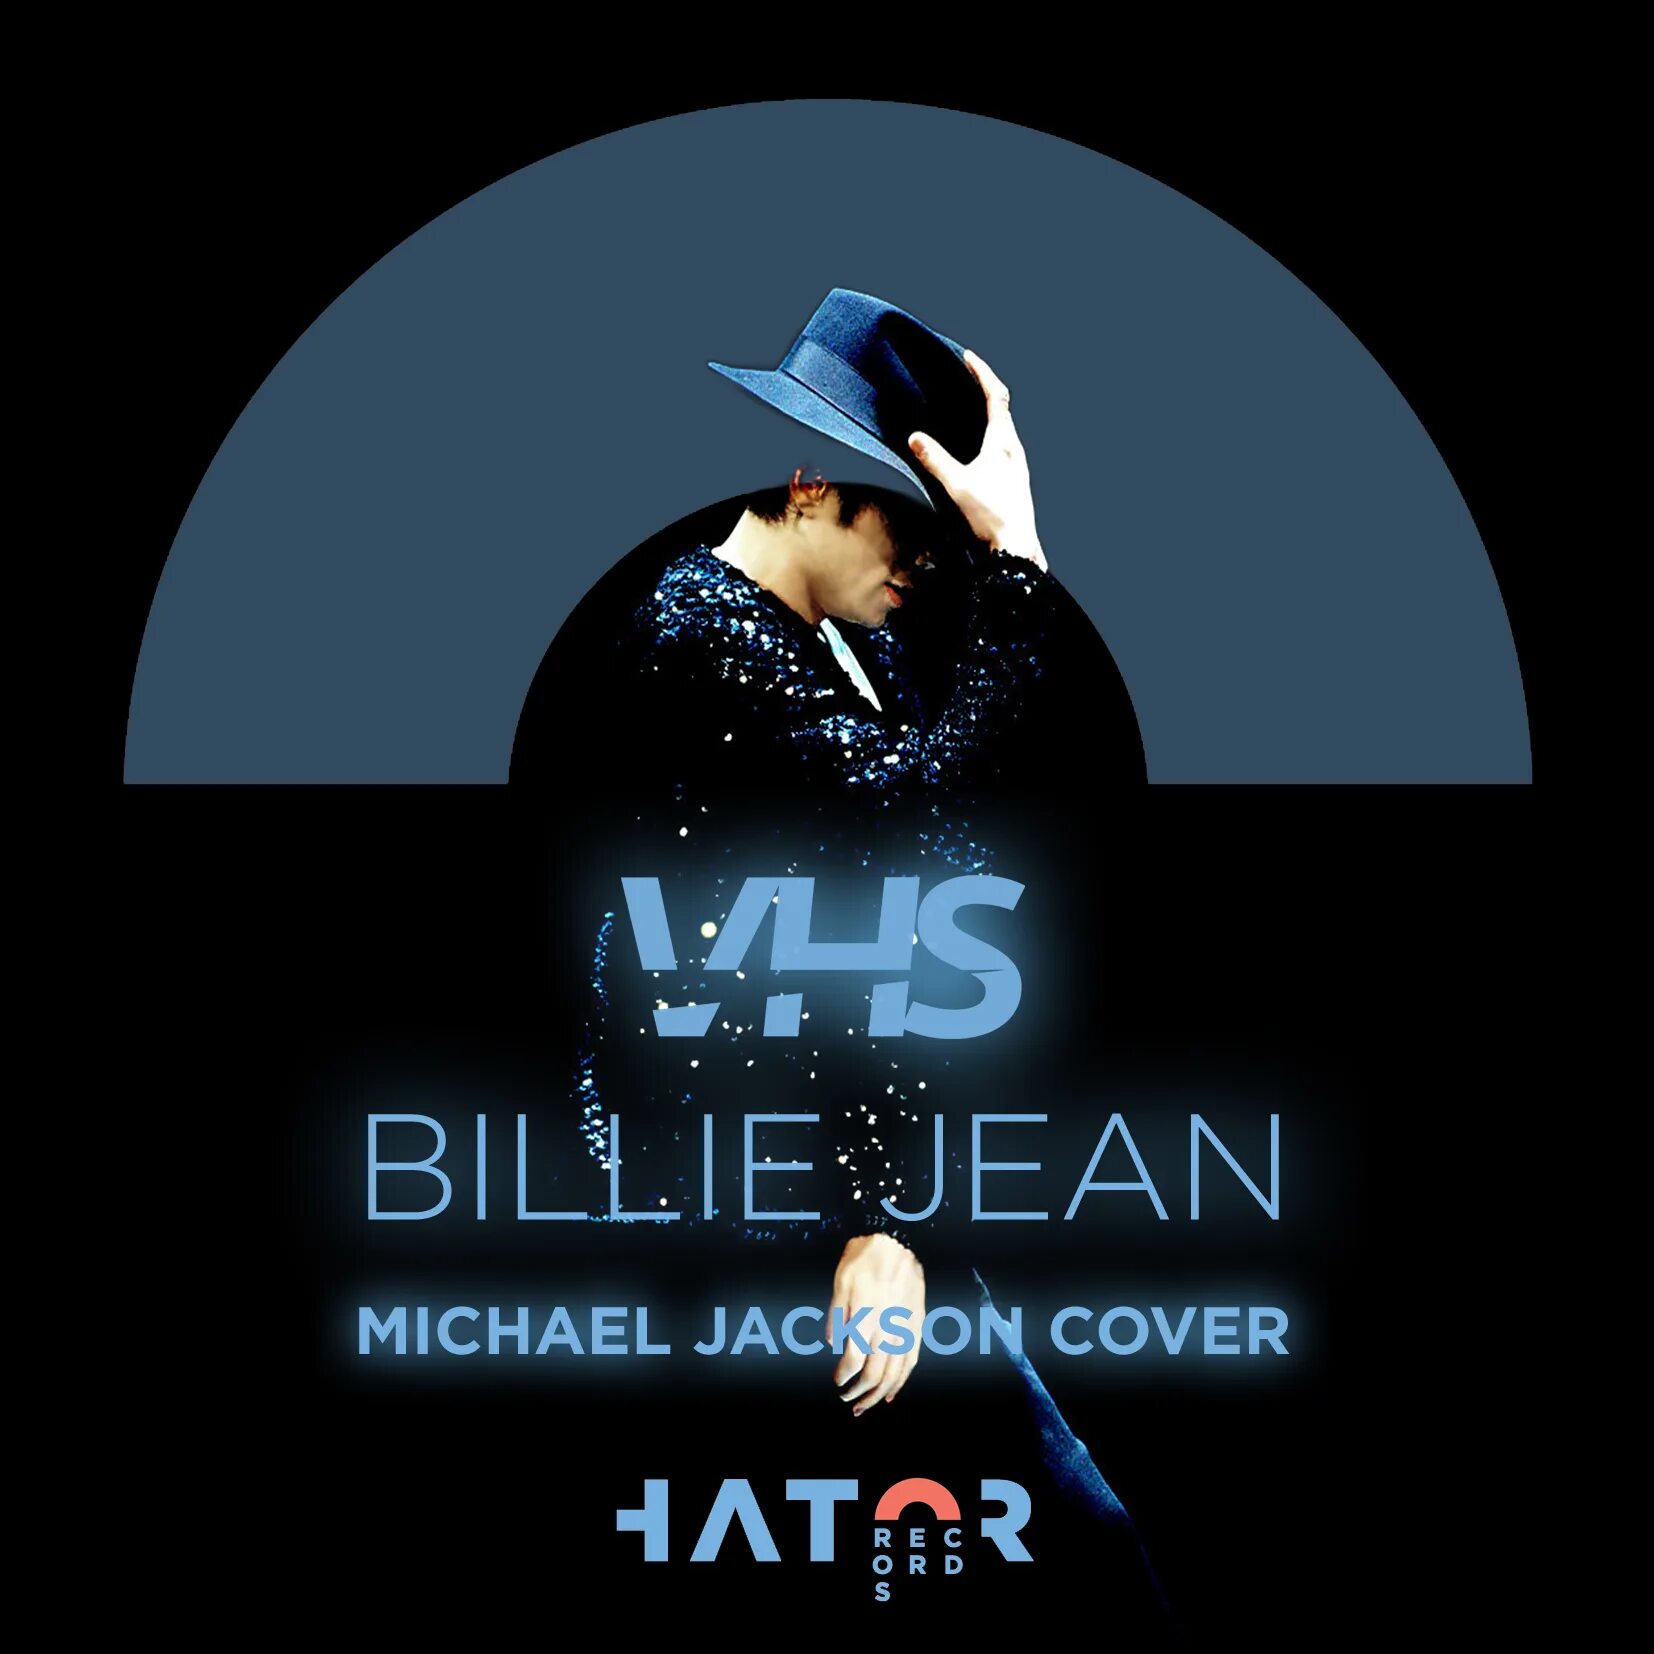 Michael Jackson Billie Jean 1982. Michael Jackson - Billie Jean альбом. Michael Jackson - Billie Jean обложка альбома.